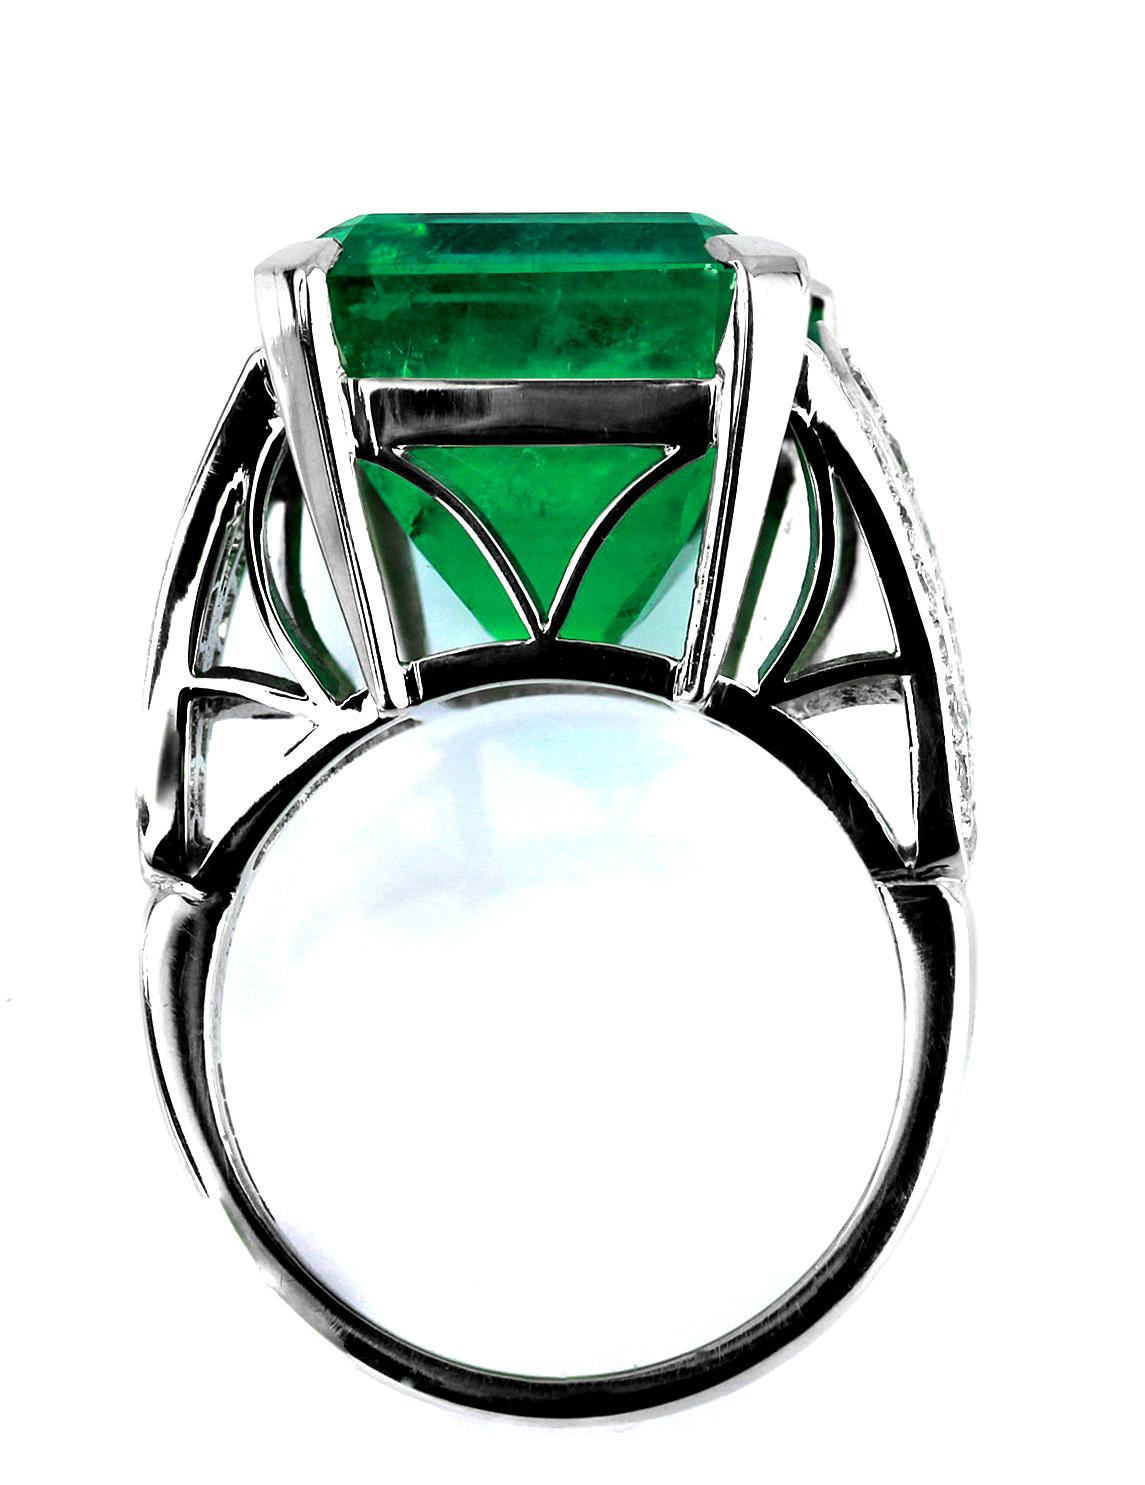 Emerald Cut Certified Colombian Emerald 12.9 Carat and Diamonds Fleur-de-Lis Design Ring